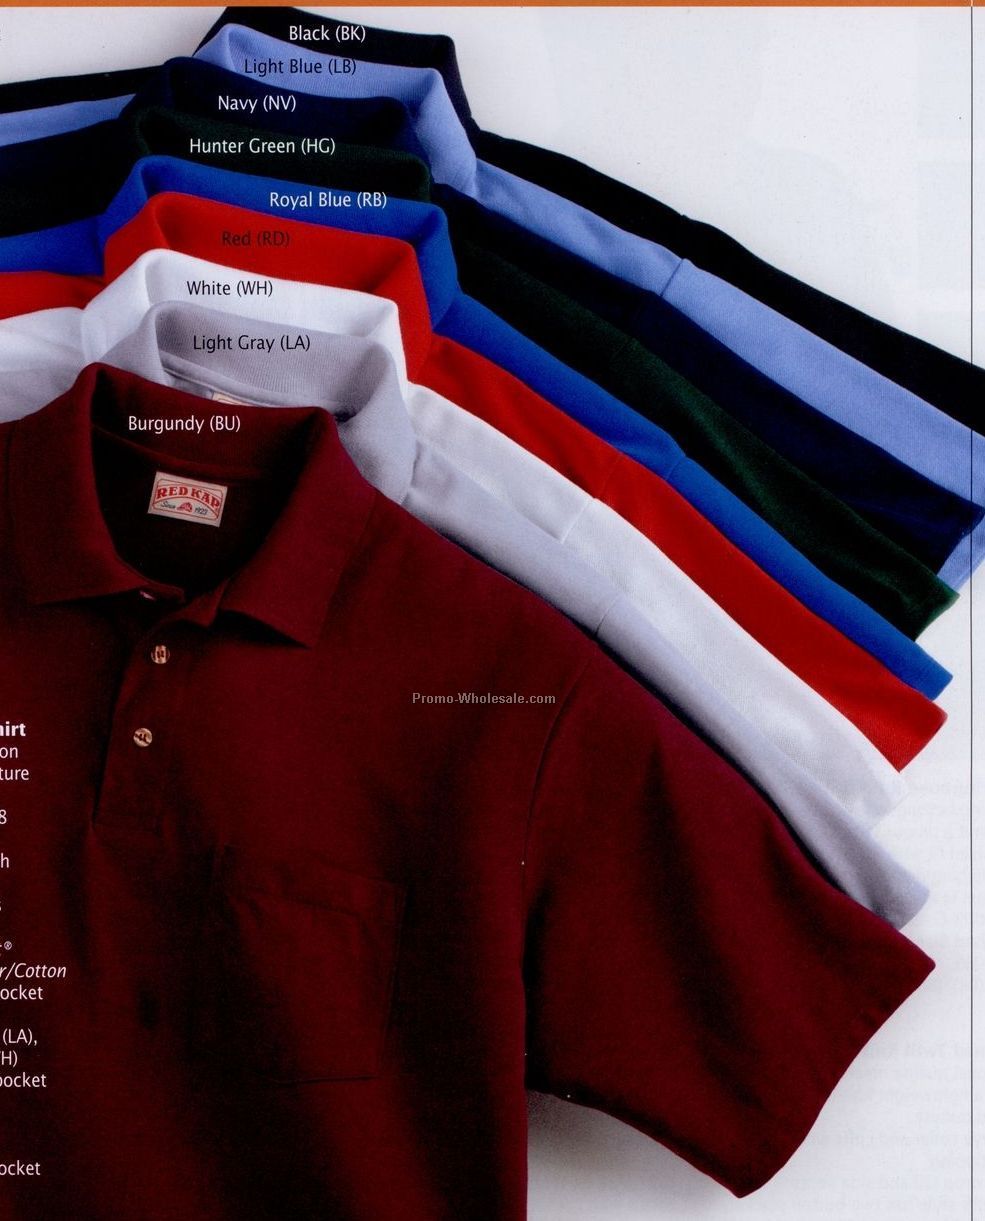 Red Kap Short Sleeve Solid Color Knit Shirt W/ Pocket (S-xl) - Light Gray